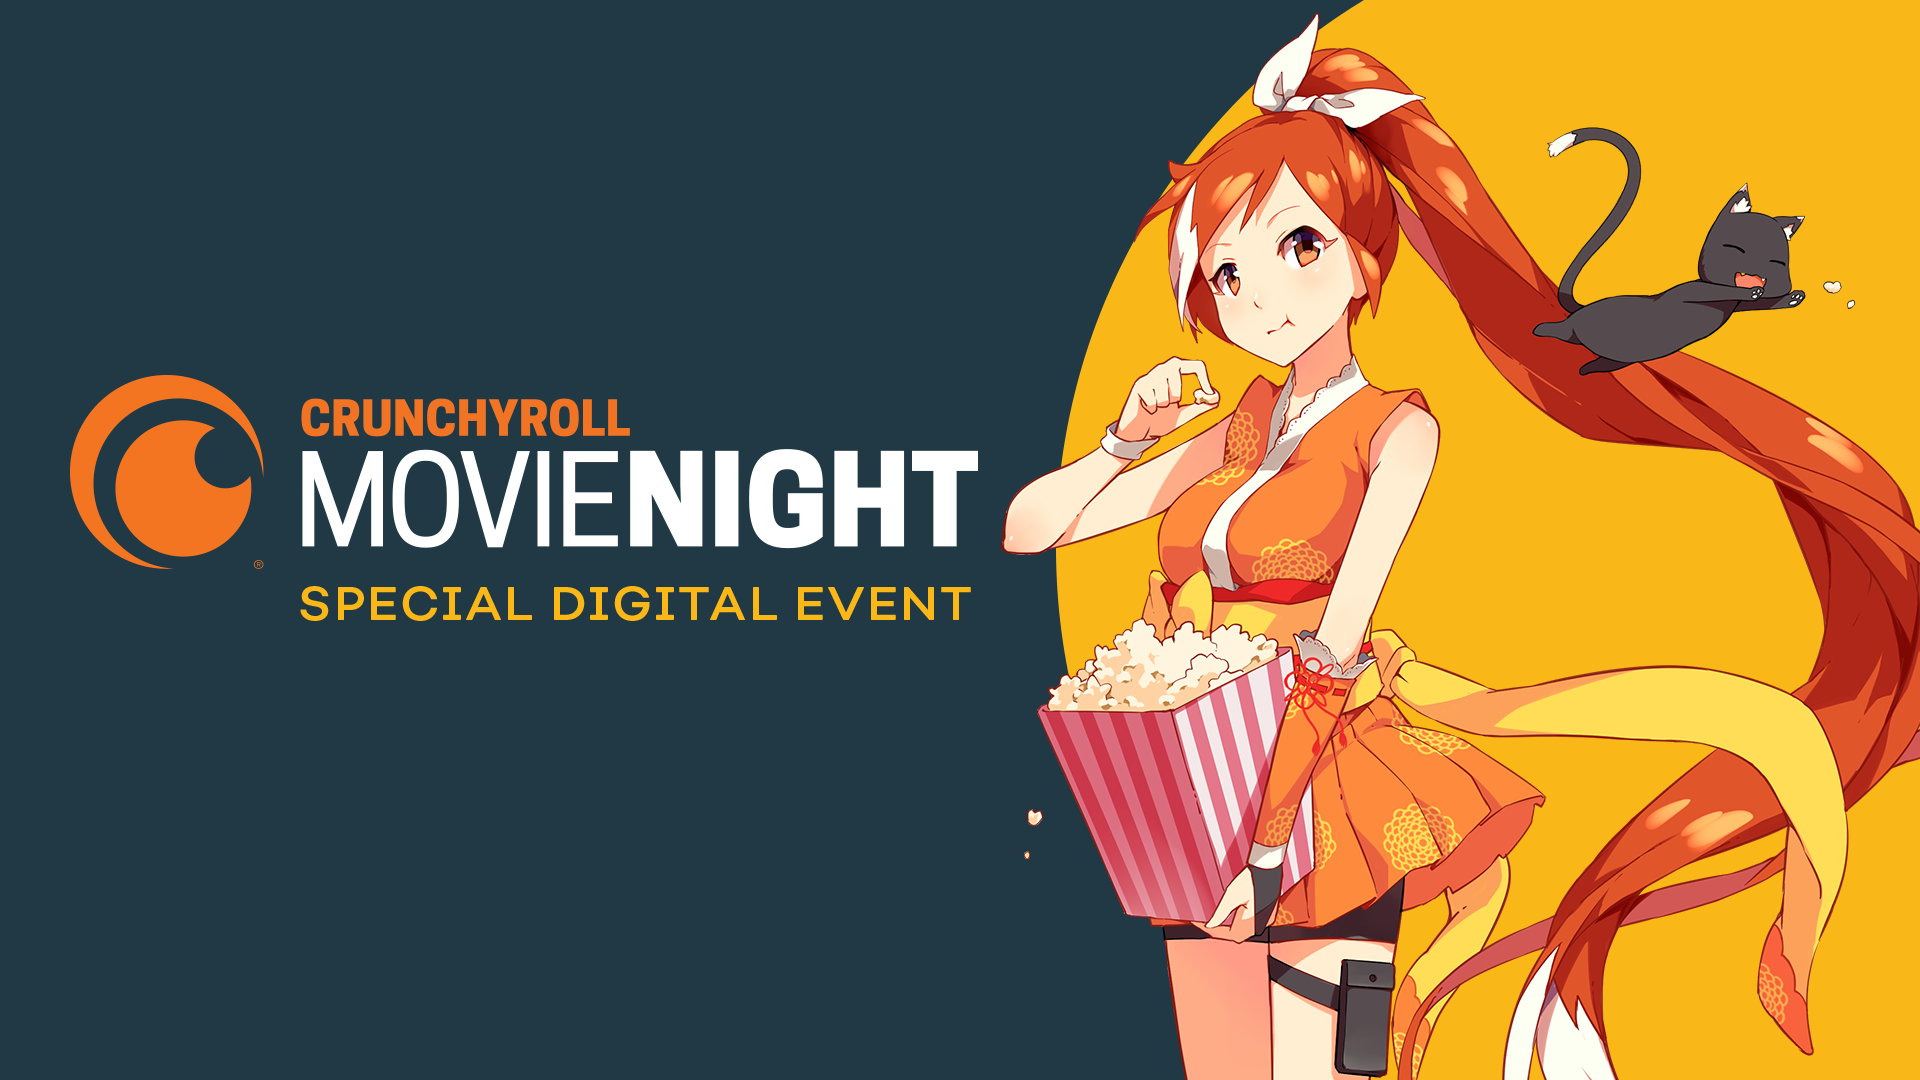 Crunchyroll Movie Night at Home